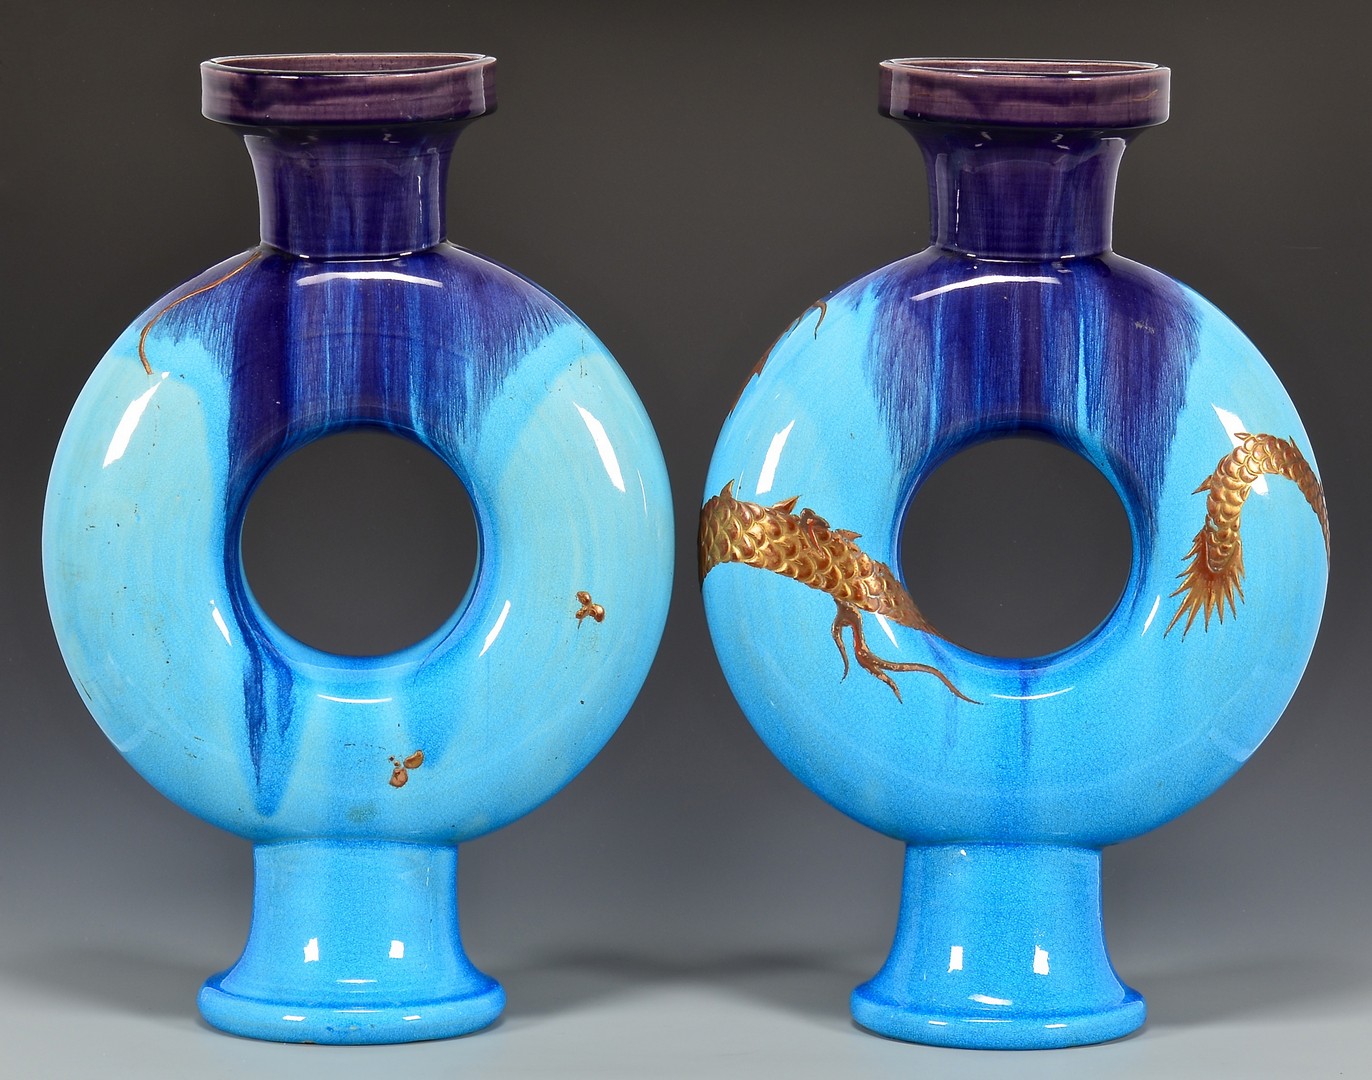 Lot 742: Pr. French Glazed Ceramic Flasks